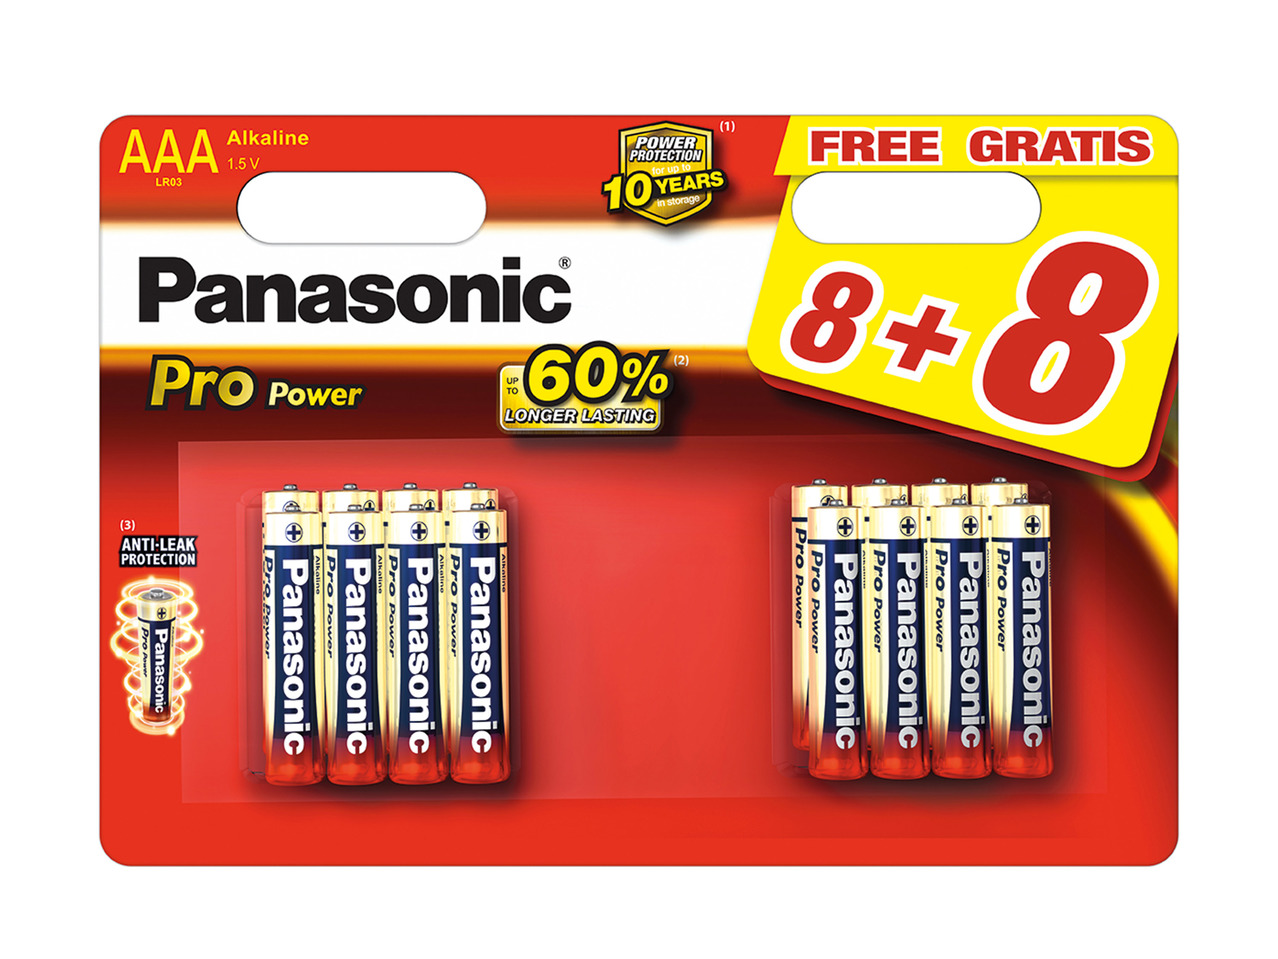 Panasonic Pro Power Batteries1